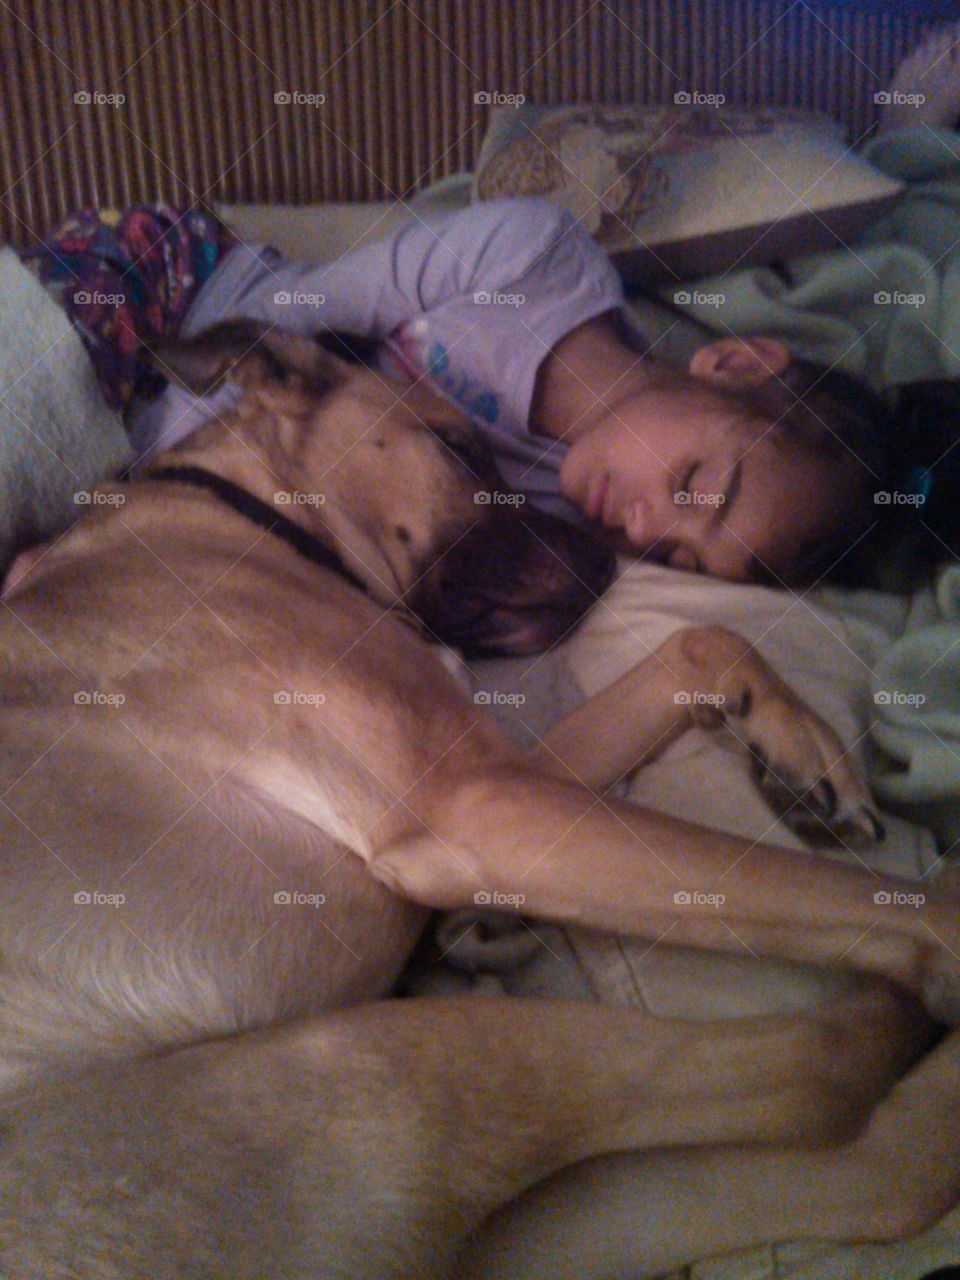 Dog and girl sleeping on bed